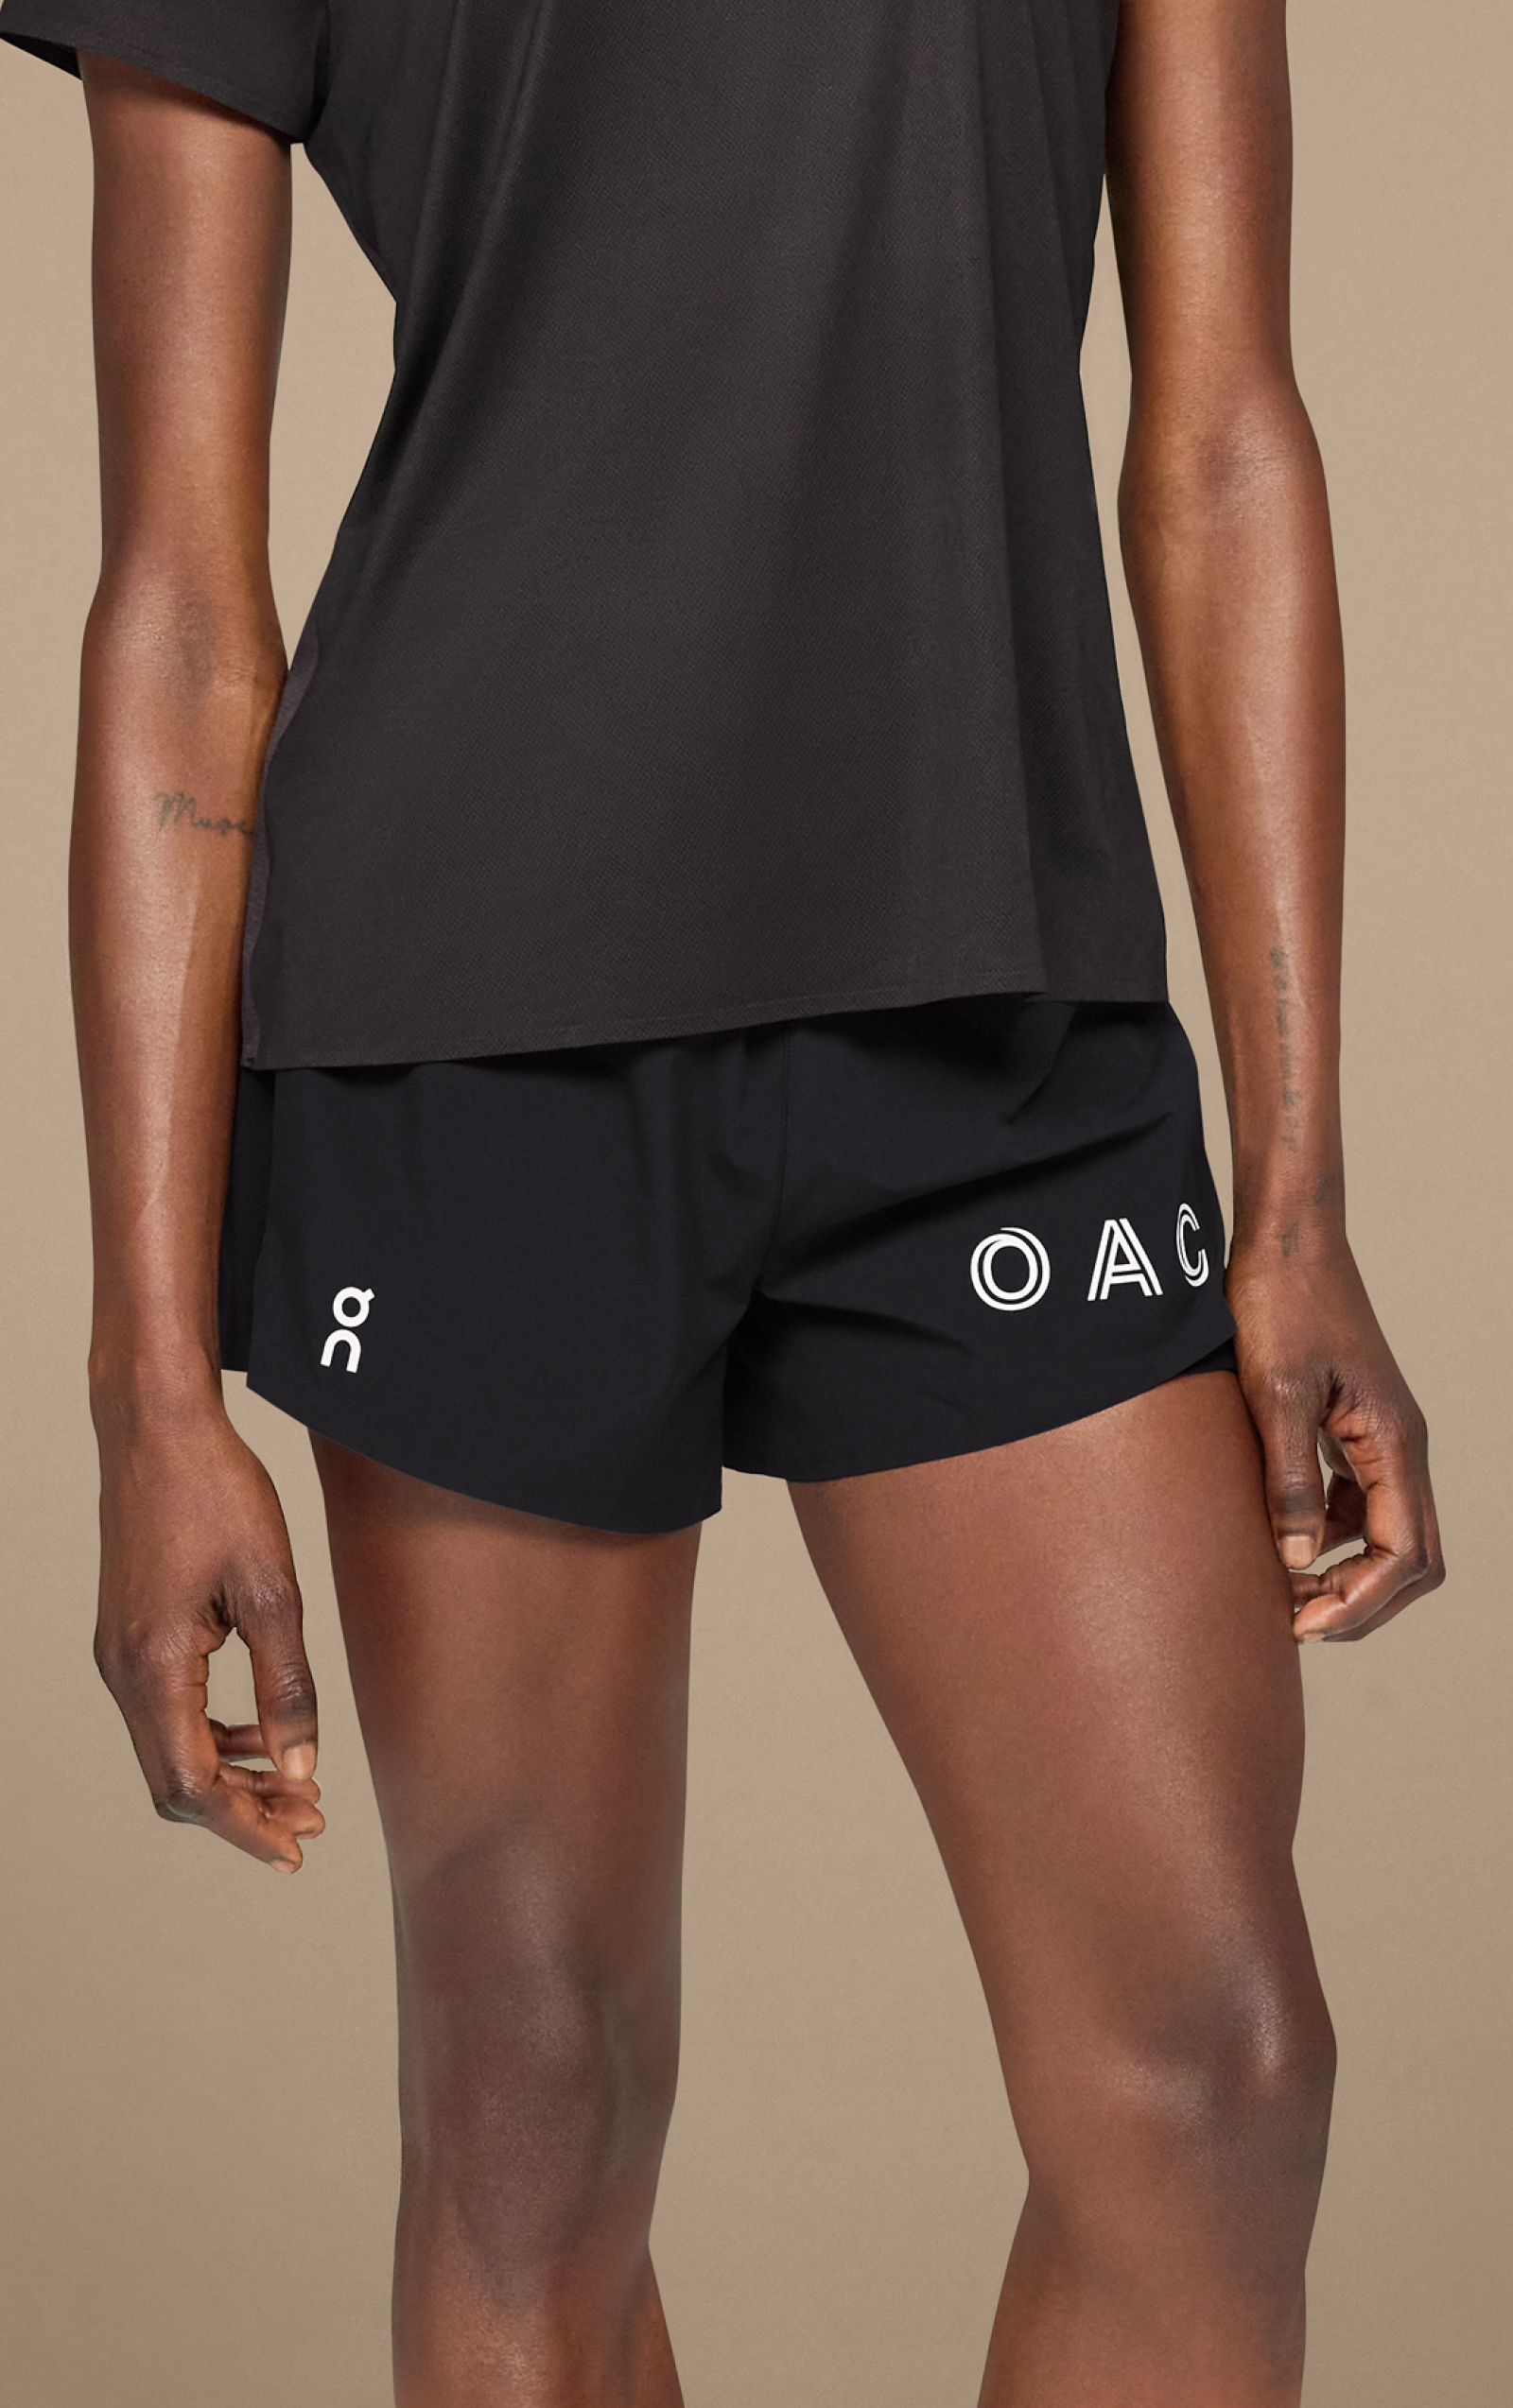 Women's Running Shorts OAC | Black | On United States